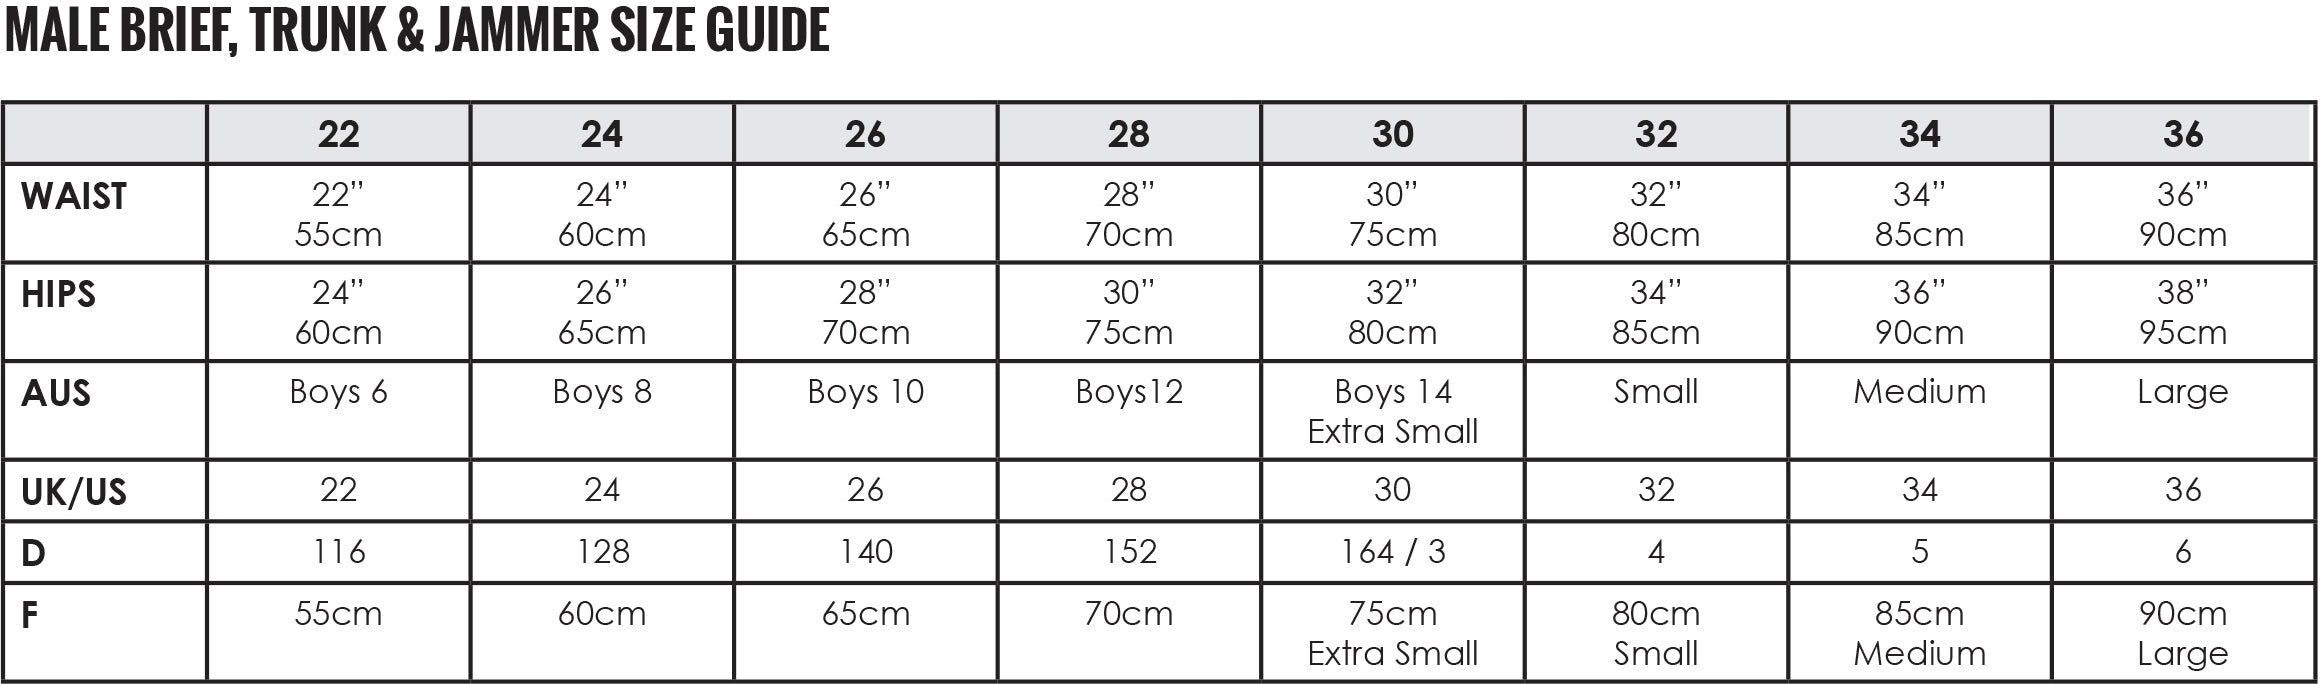 AMANZI Male Brief, Trunk & Jammer Size Guide